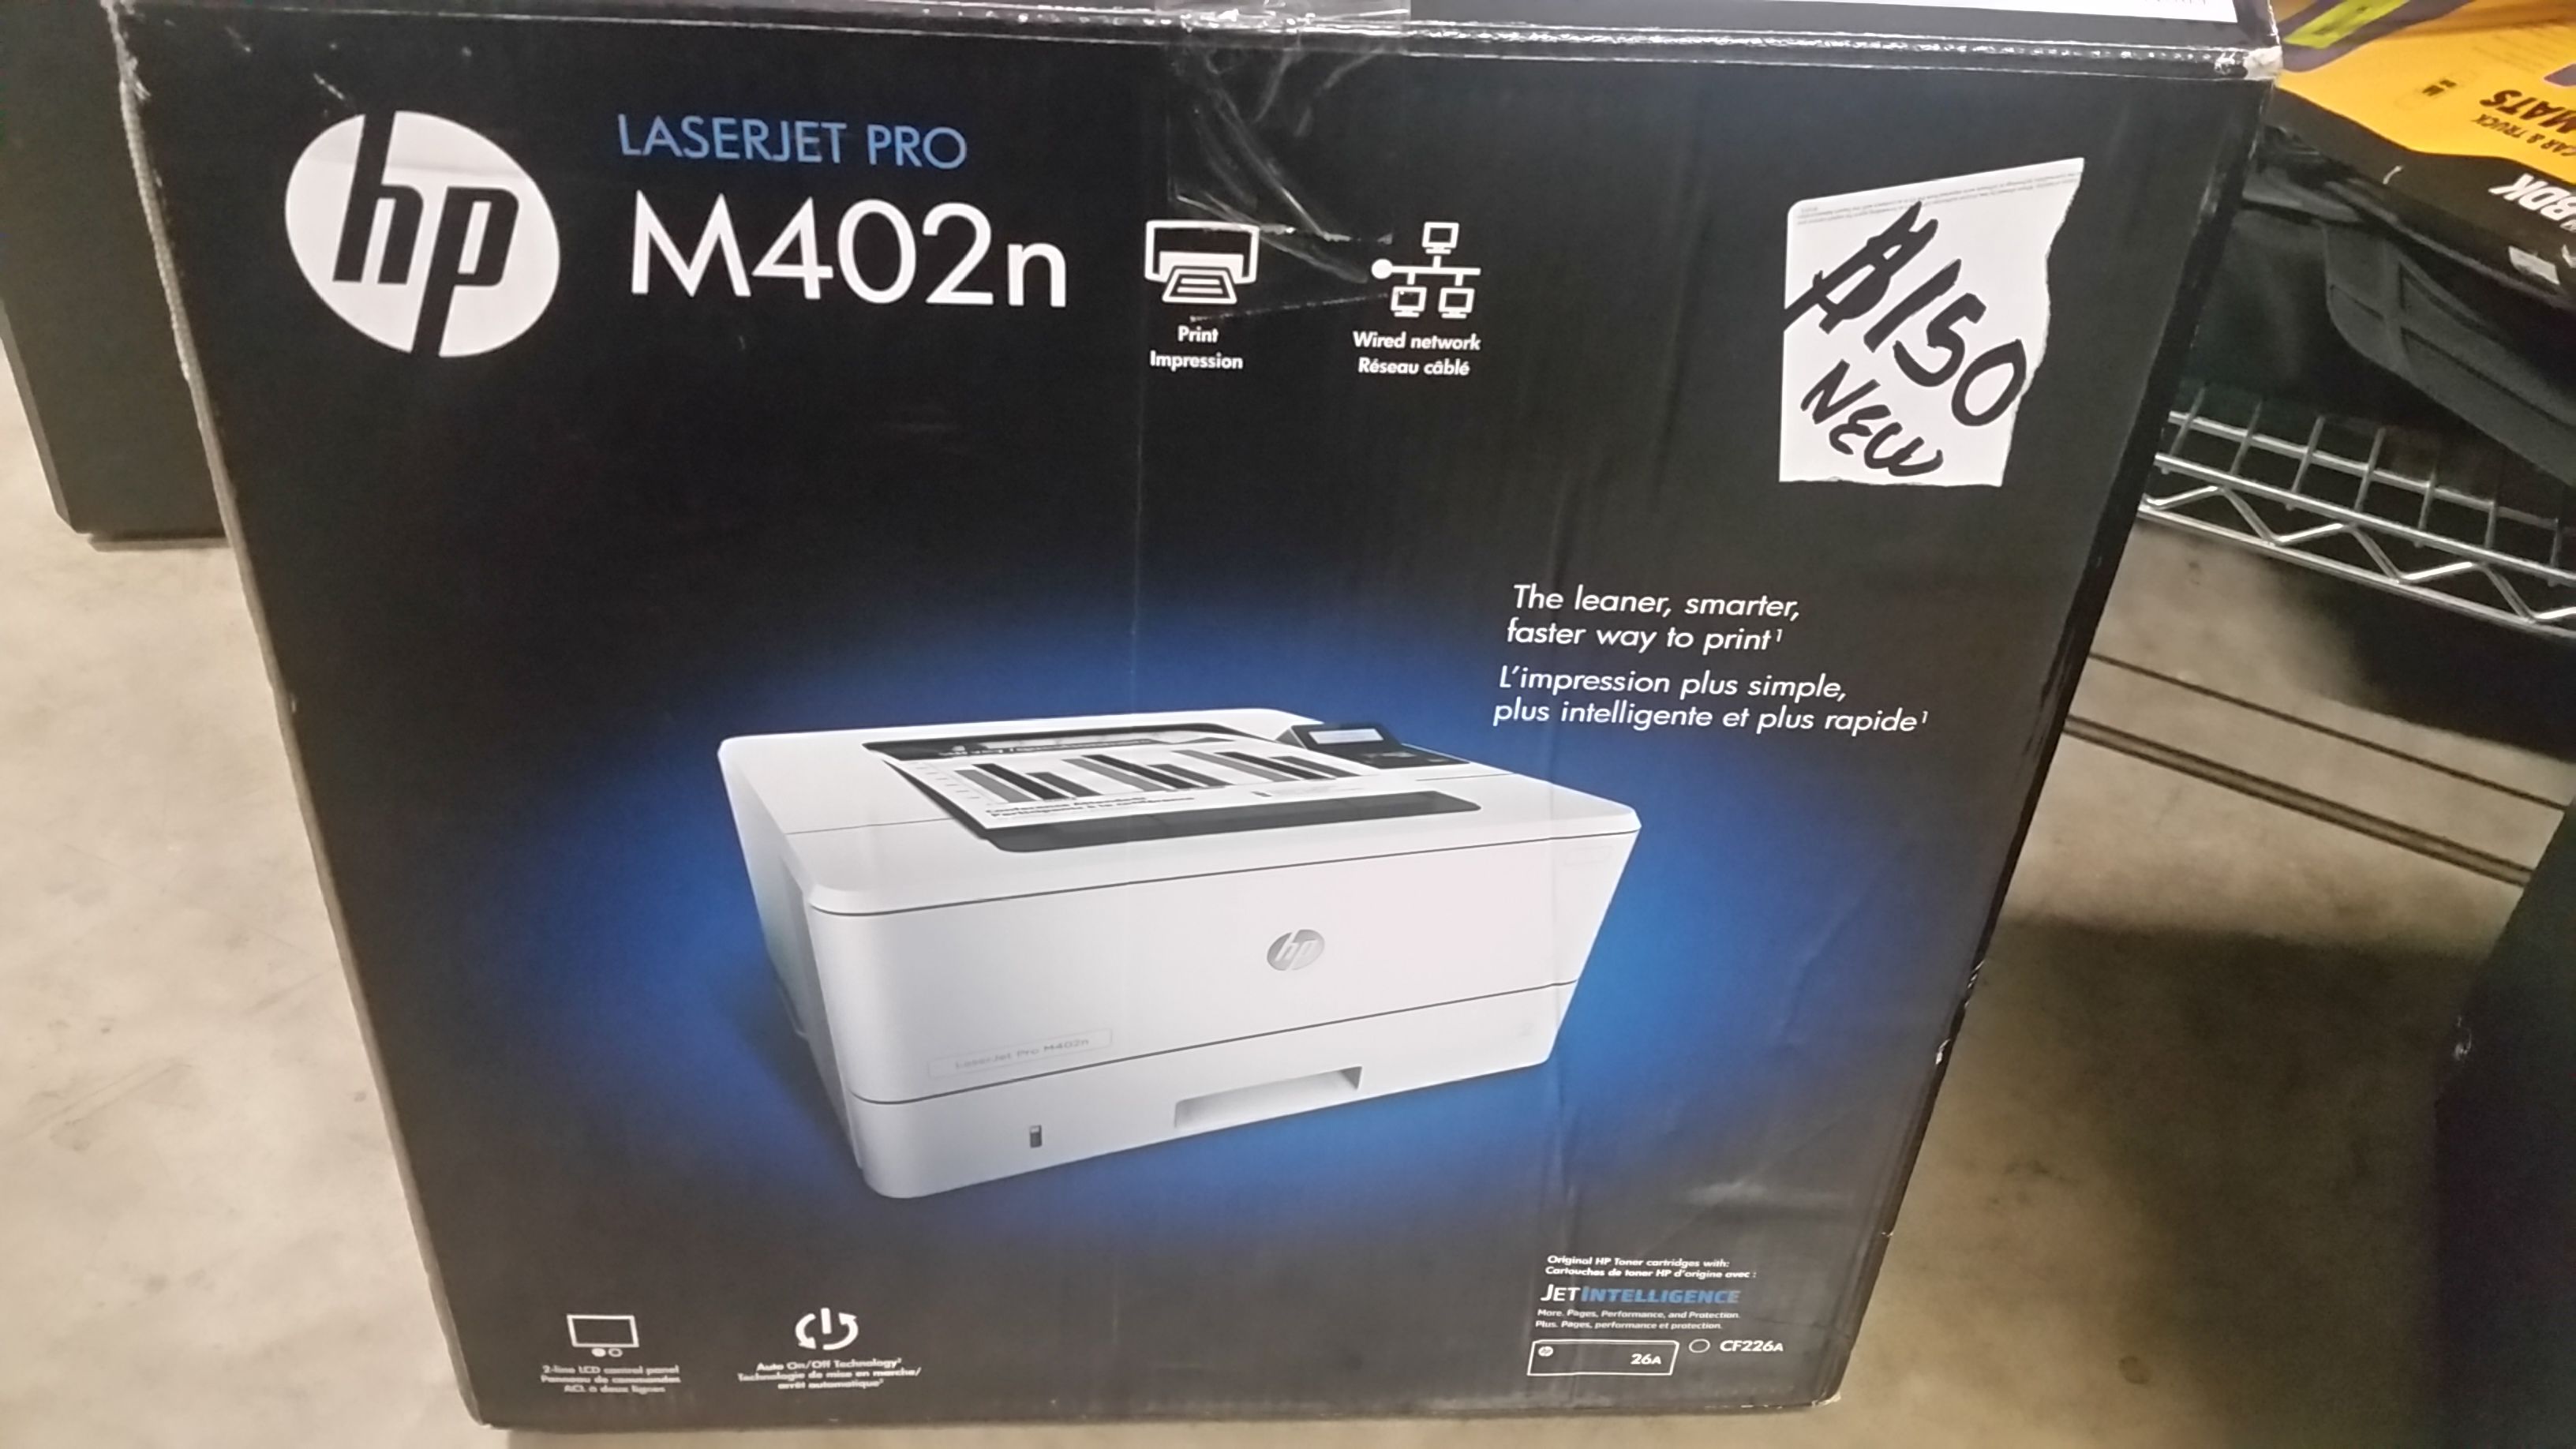 Brand new printer laser jet pro m402n